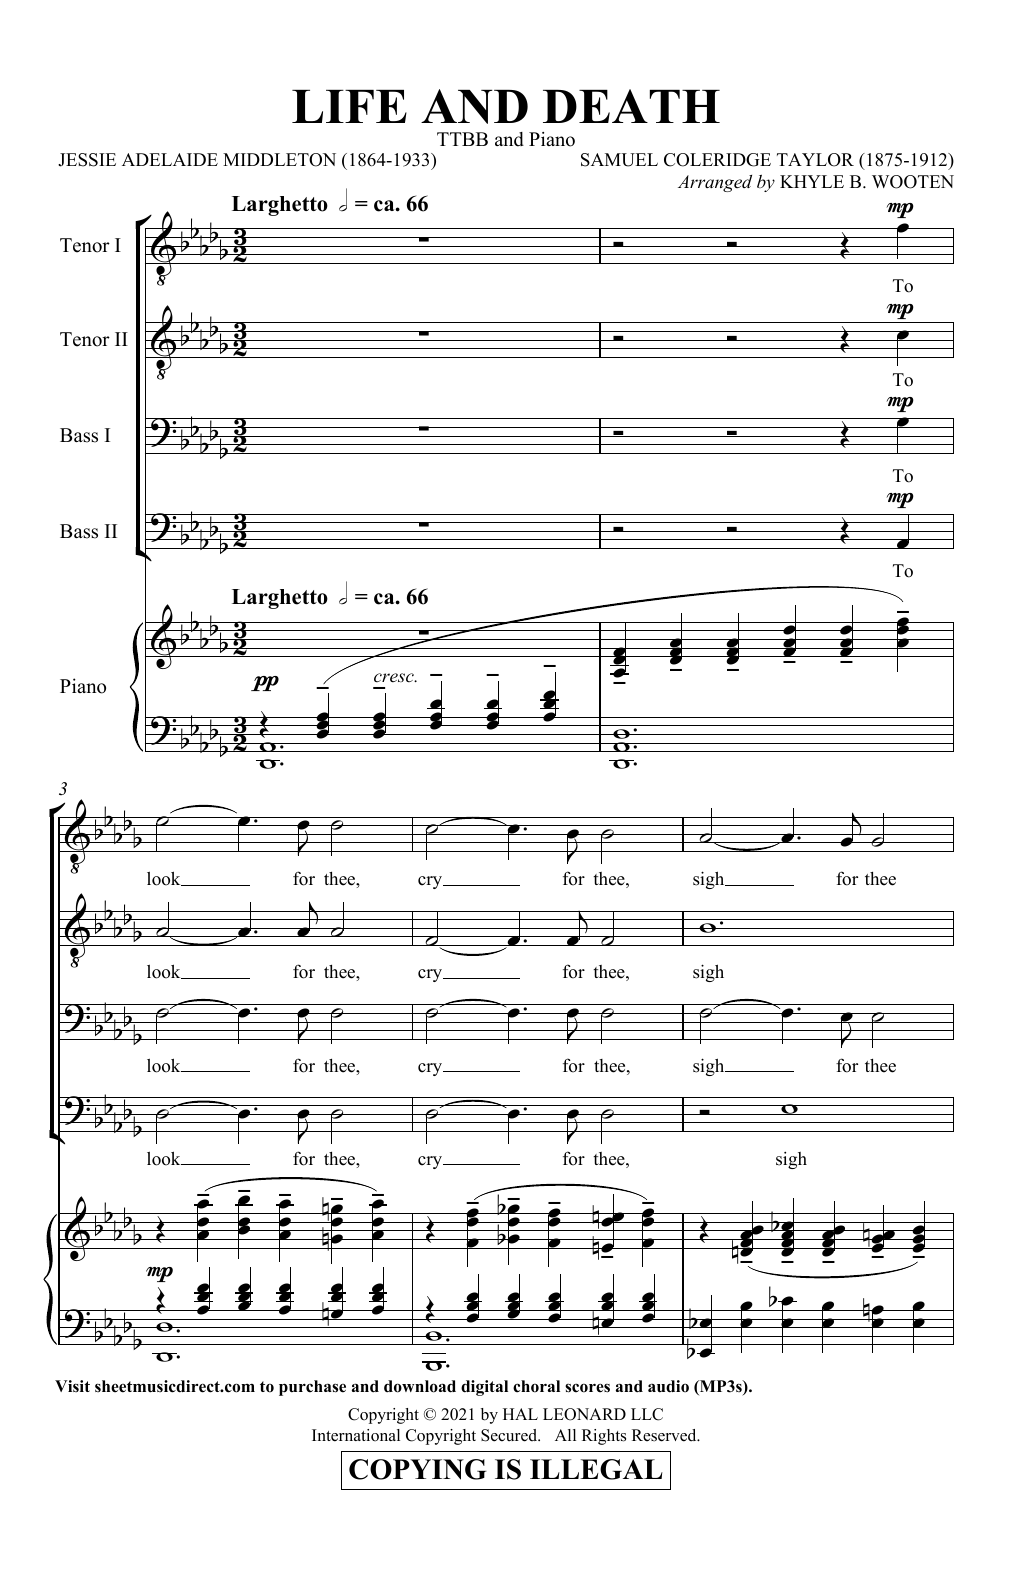 Samuel Coleridge Taylor Life And Death (arr. Khyle B. Wooten) sheet music notes and chords arranged for TTBB Choir